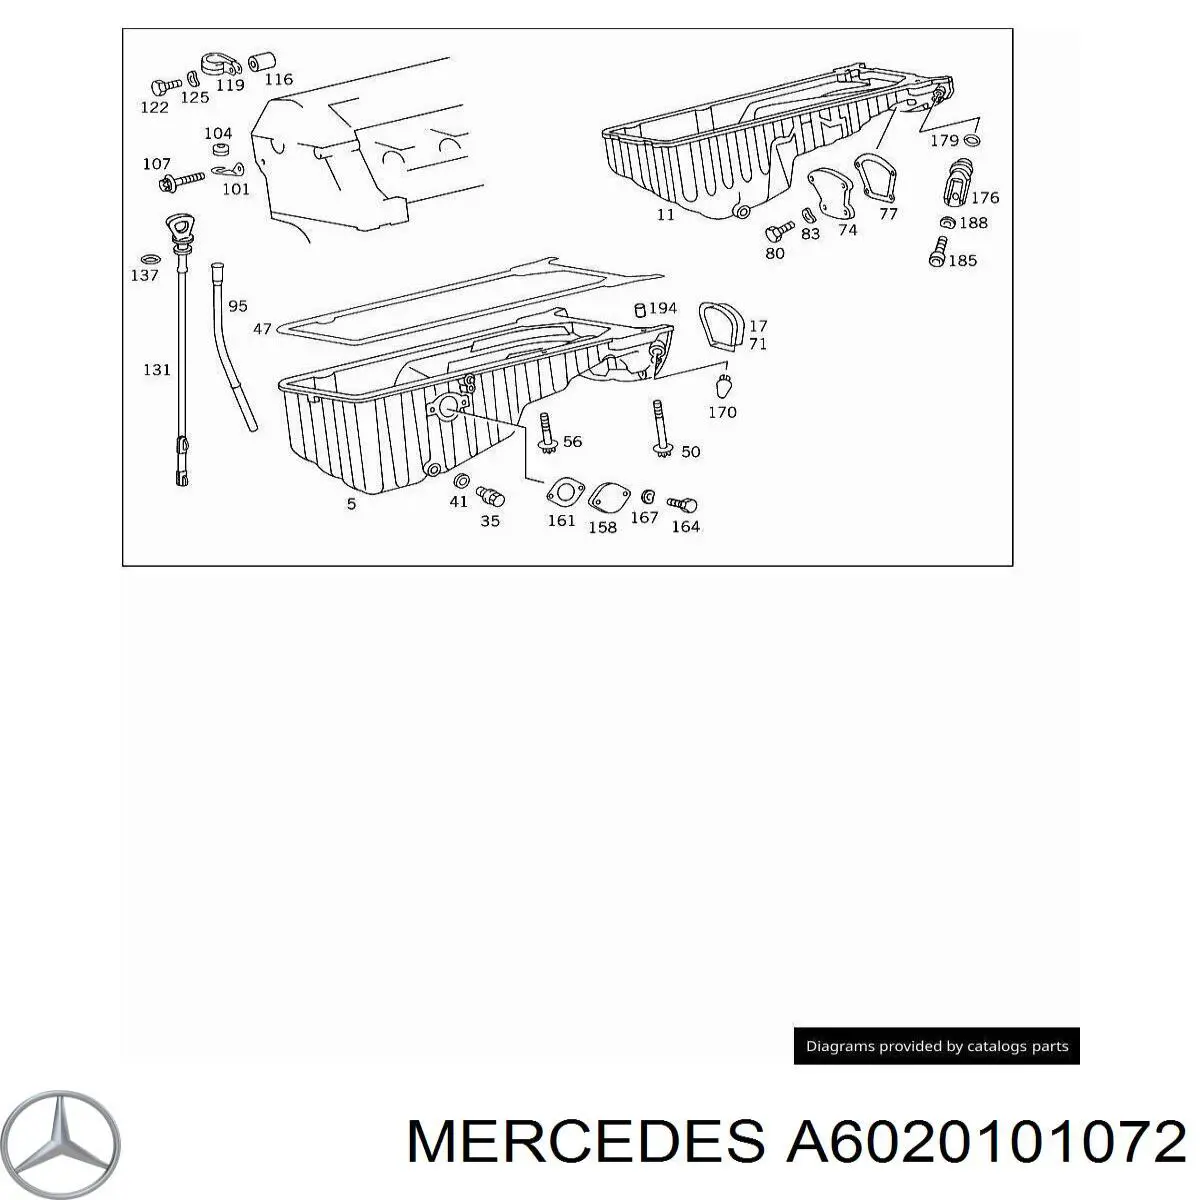 A6020101072 Mercedes щуп-індикатор рівня масла в двигуні